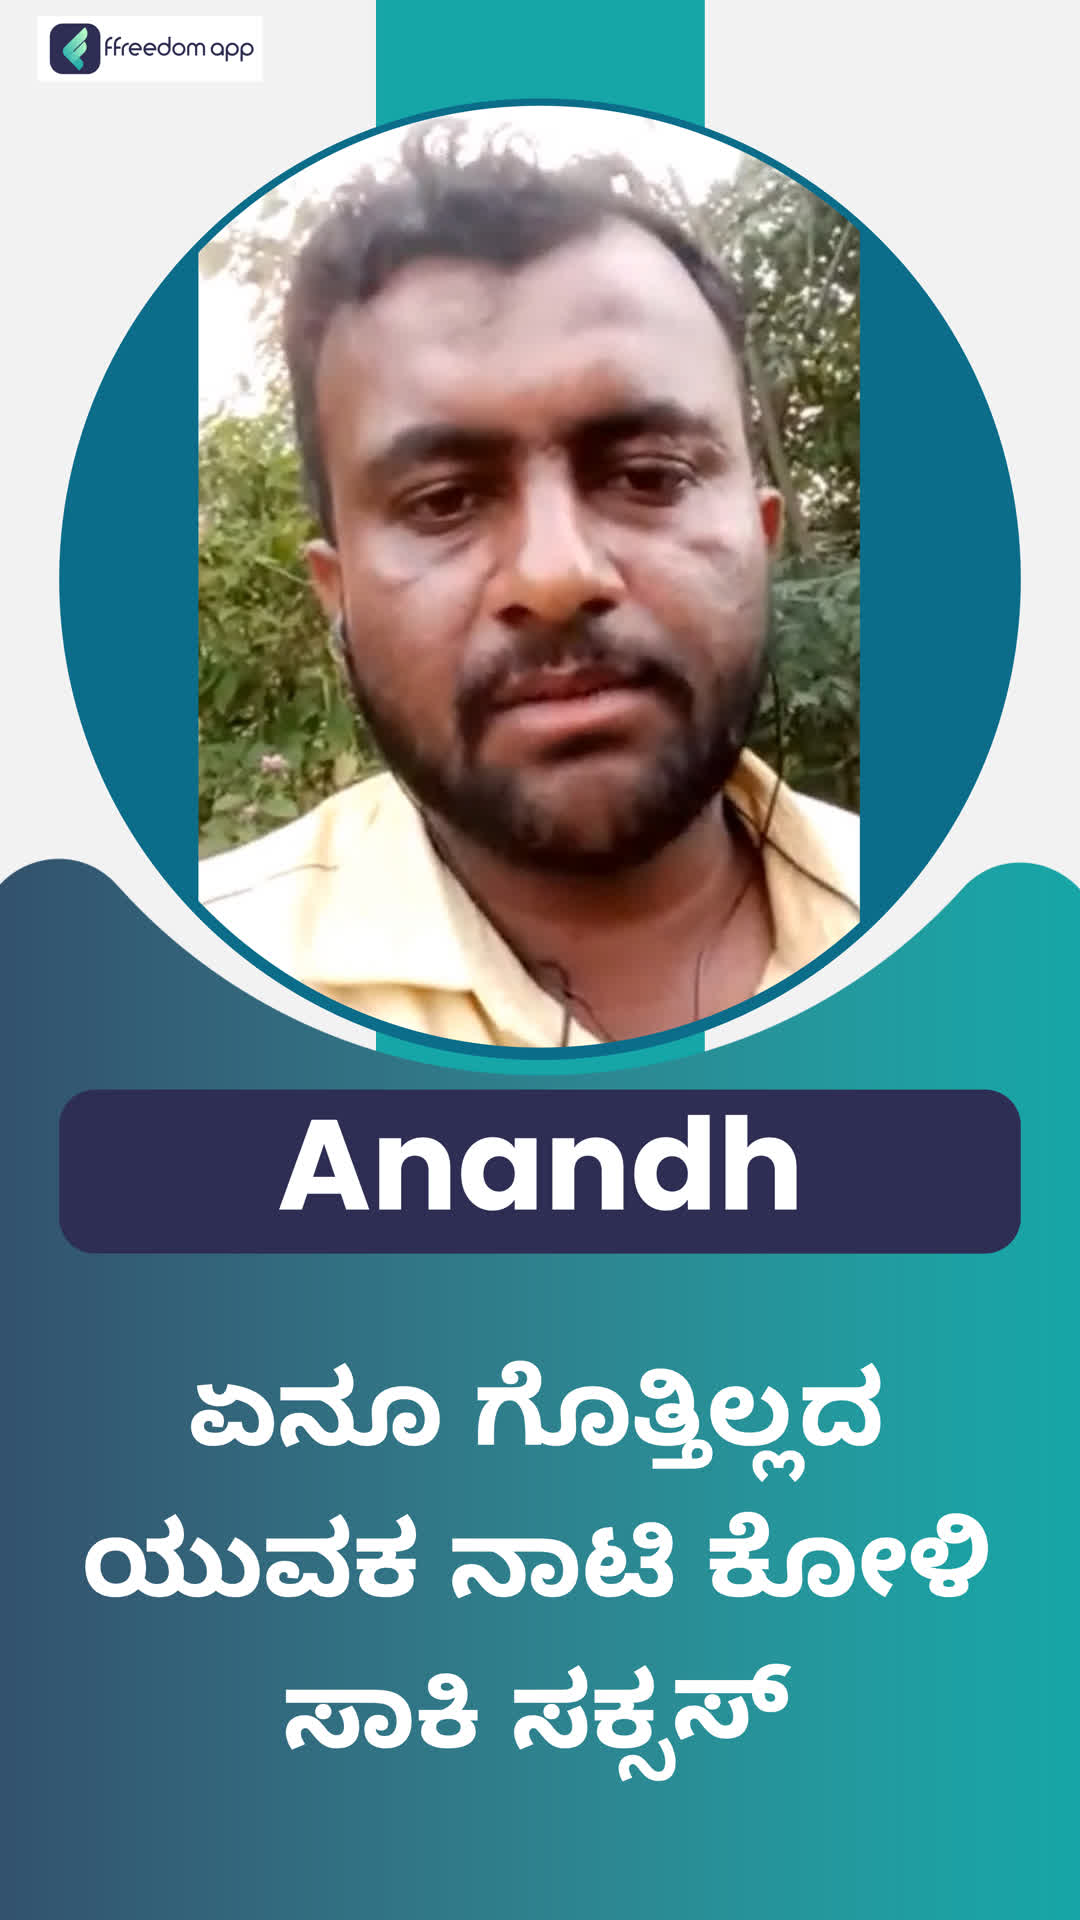 Anand's Honest Review of ffreedom app - Kolar ,Karnataka